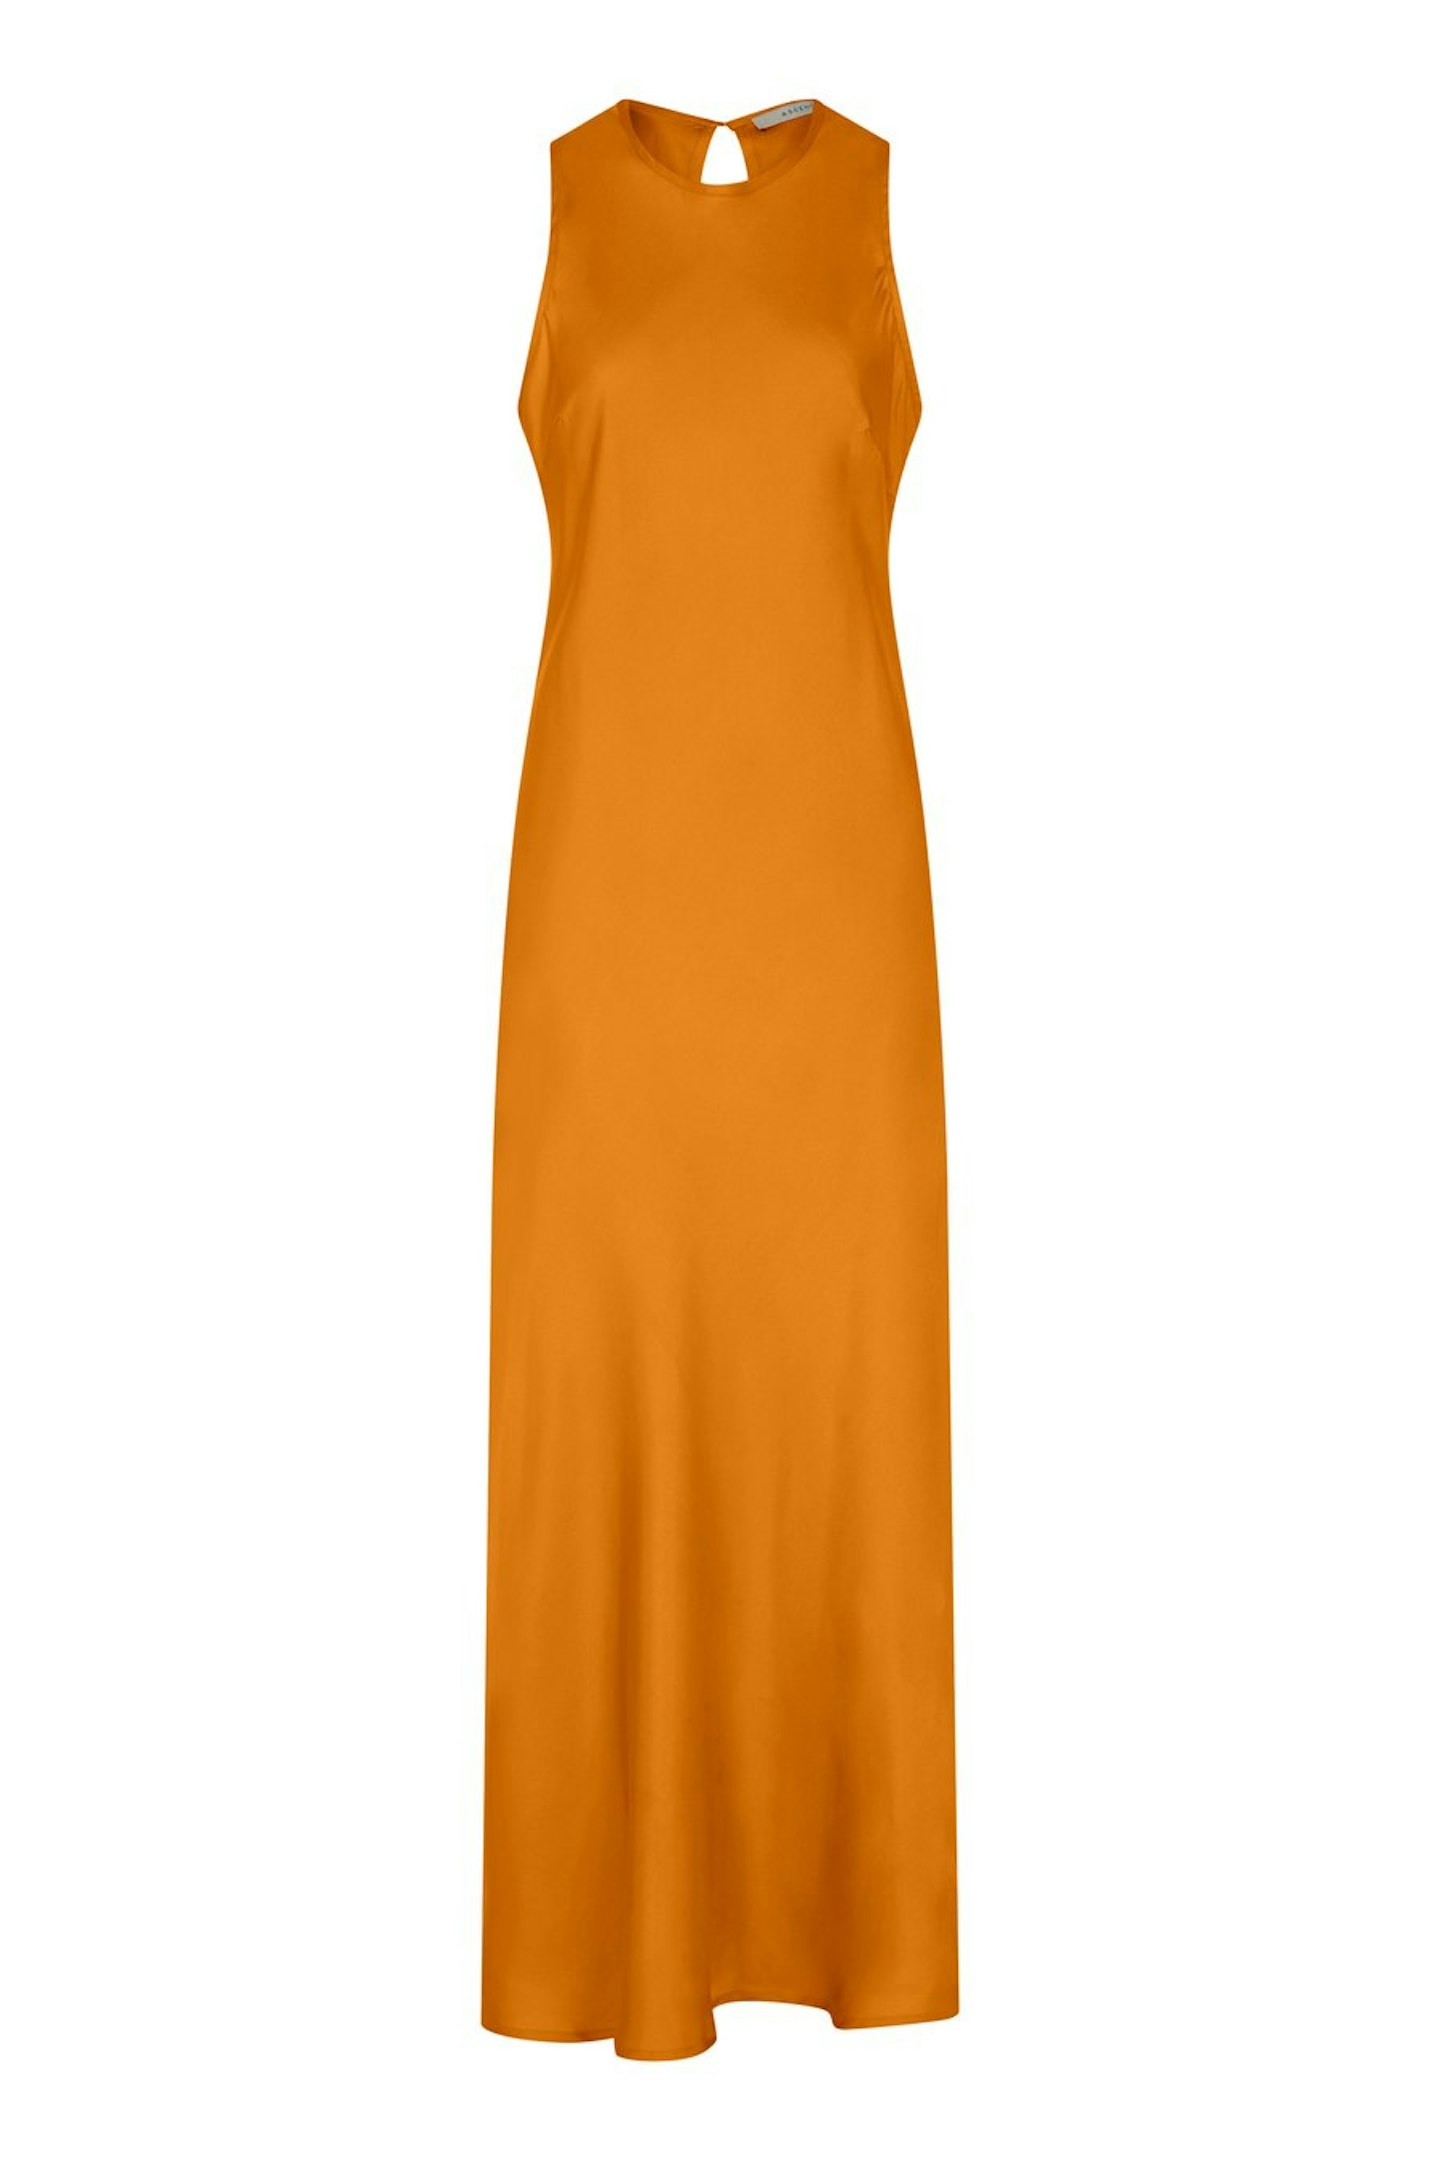 Asceno, Valencia Rust Orange Silk Twill Slip Dress, £345